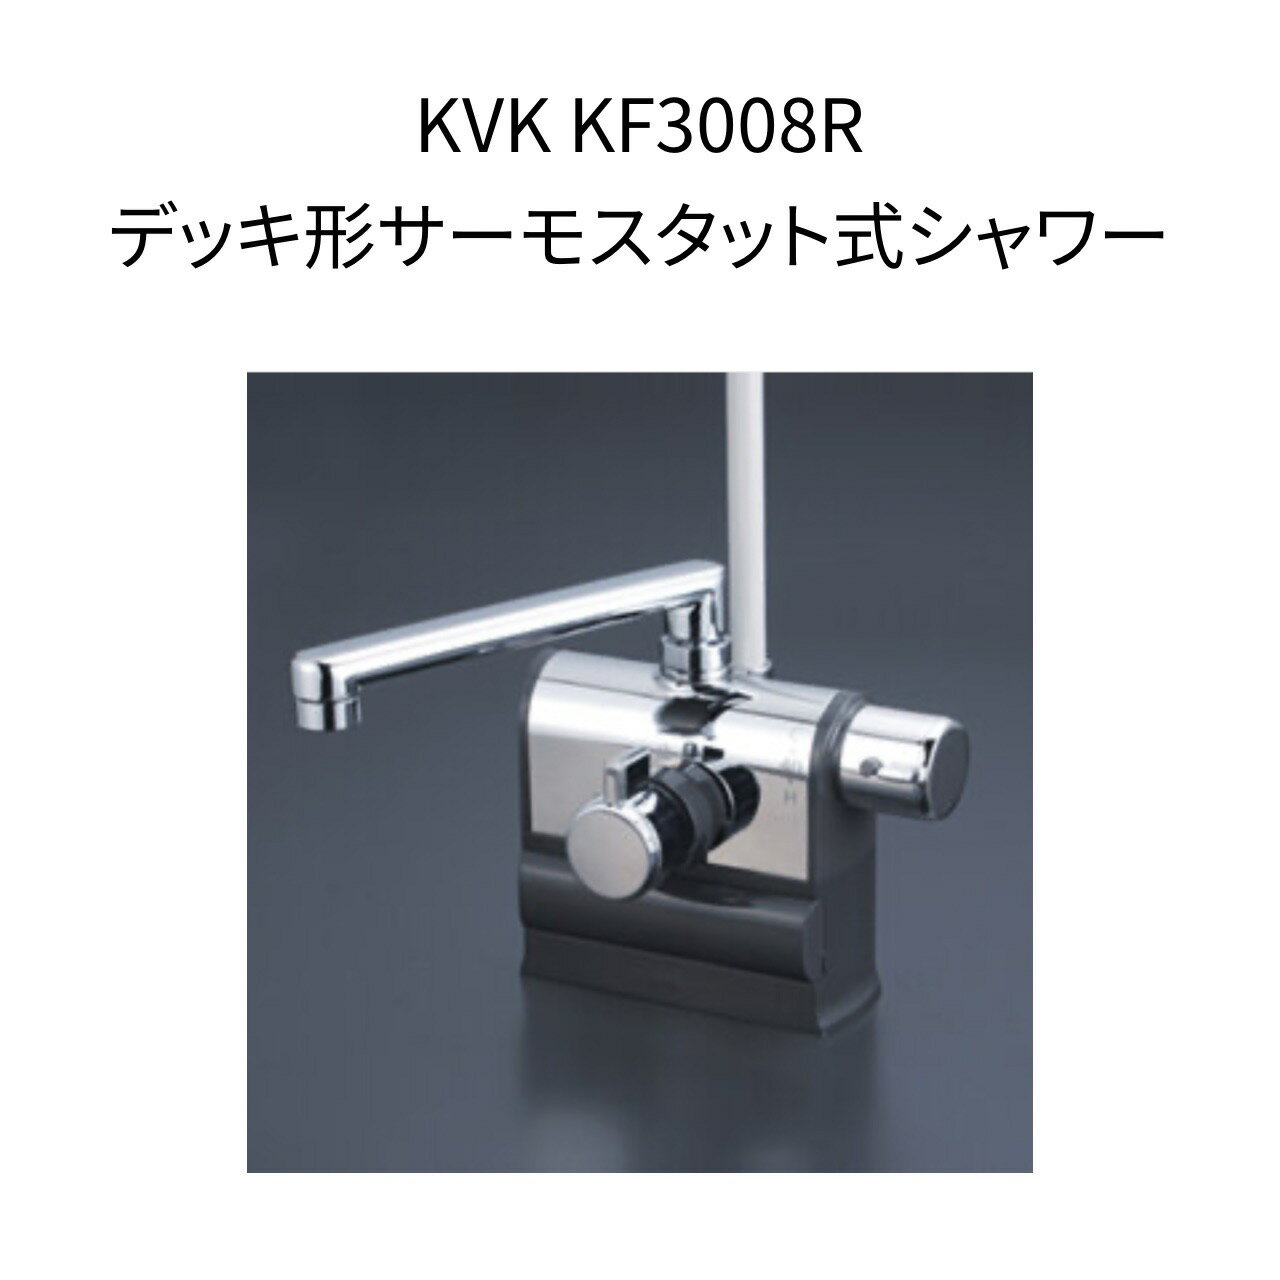 KVK KF3008R デッキ形サーモスタット式シャワー 右ハンドル仕様 190mmパイプ付 取付穴径φ23~27対応 取付ピッチ85・100・125mm 可変ピッチタイプ シャワーホースグレー1.45m グレーハンガー 混合水栓 湯水